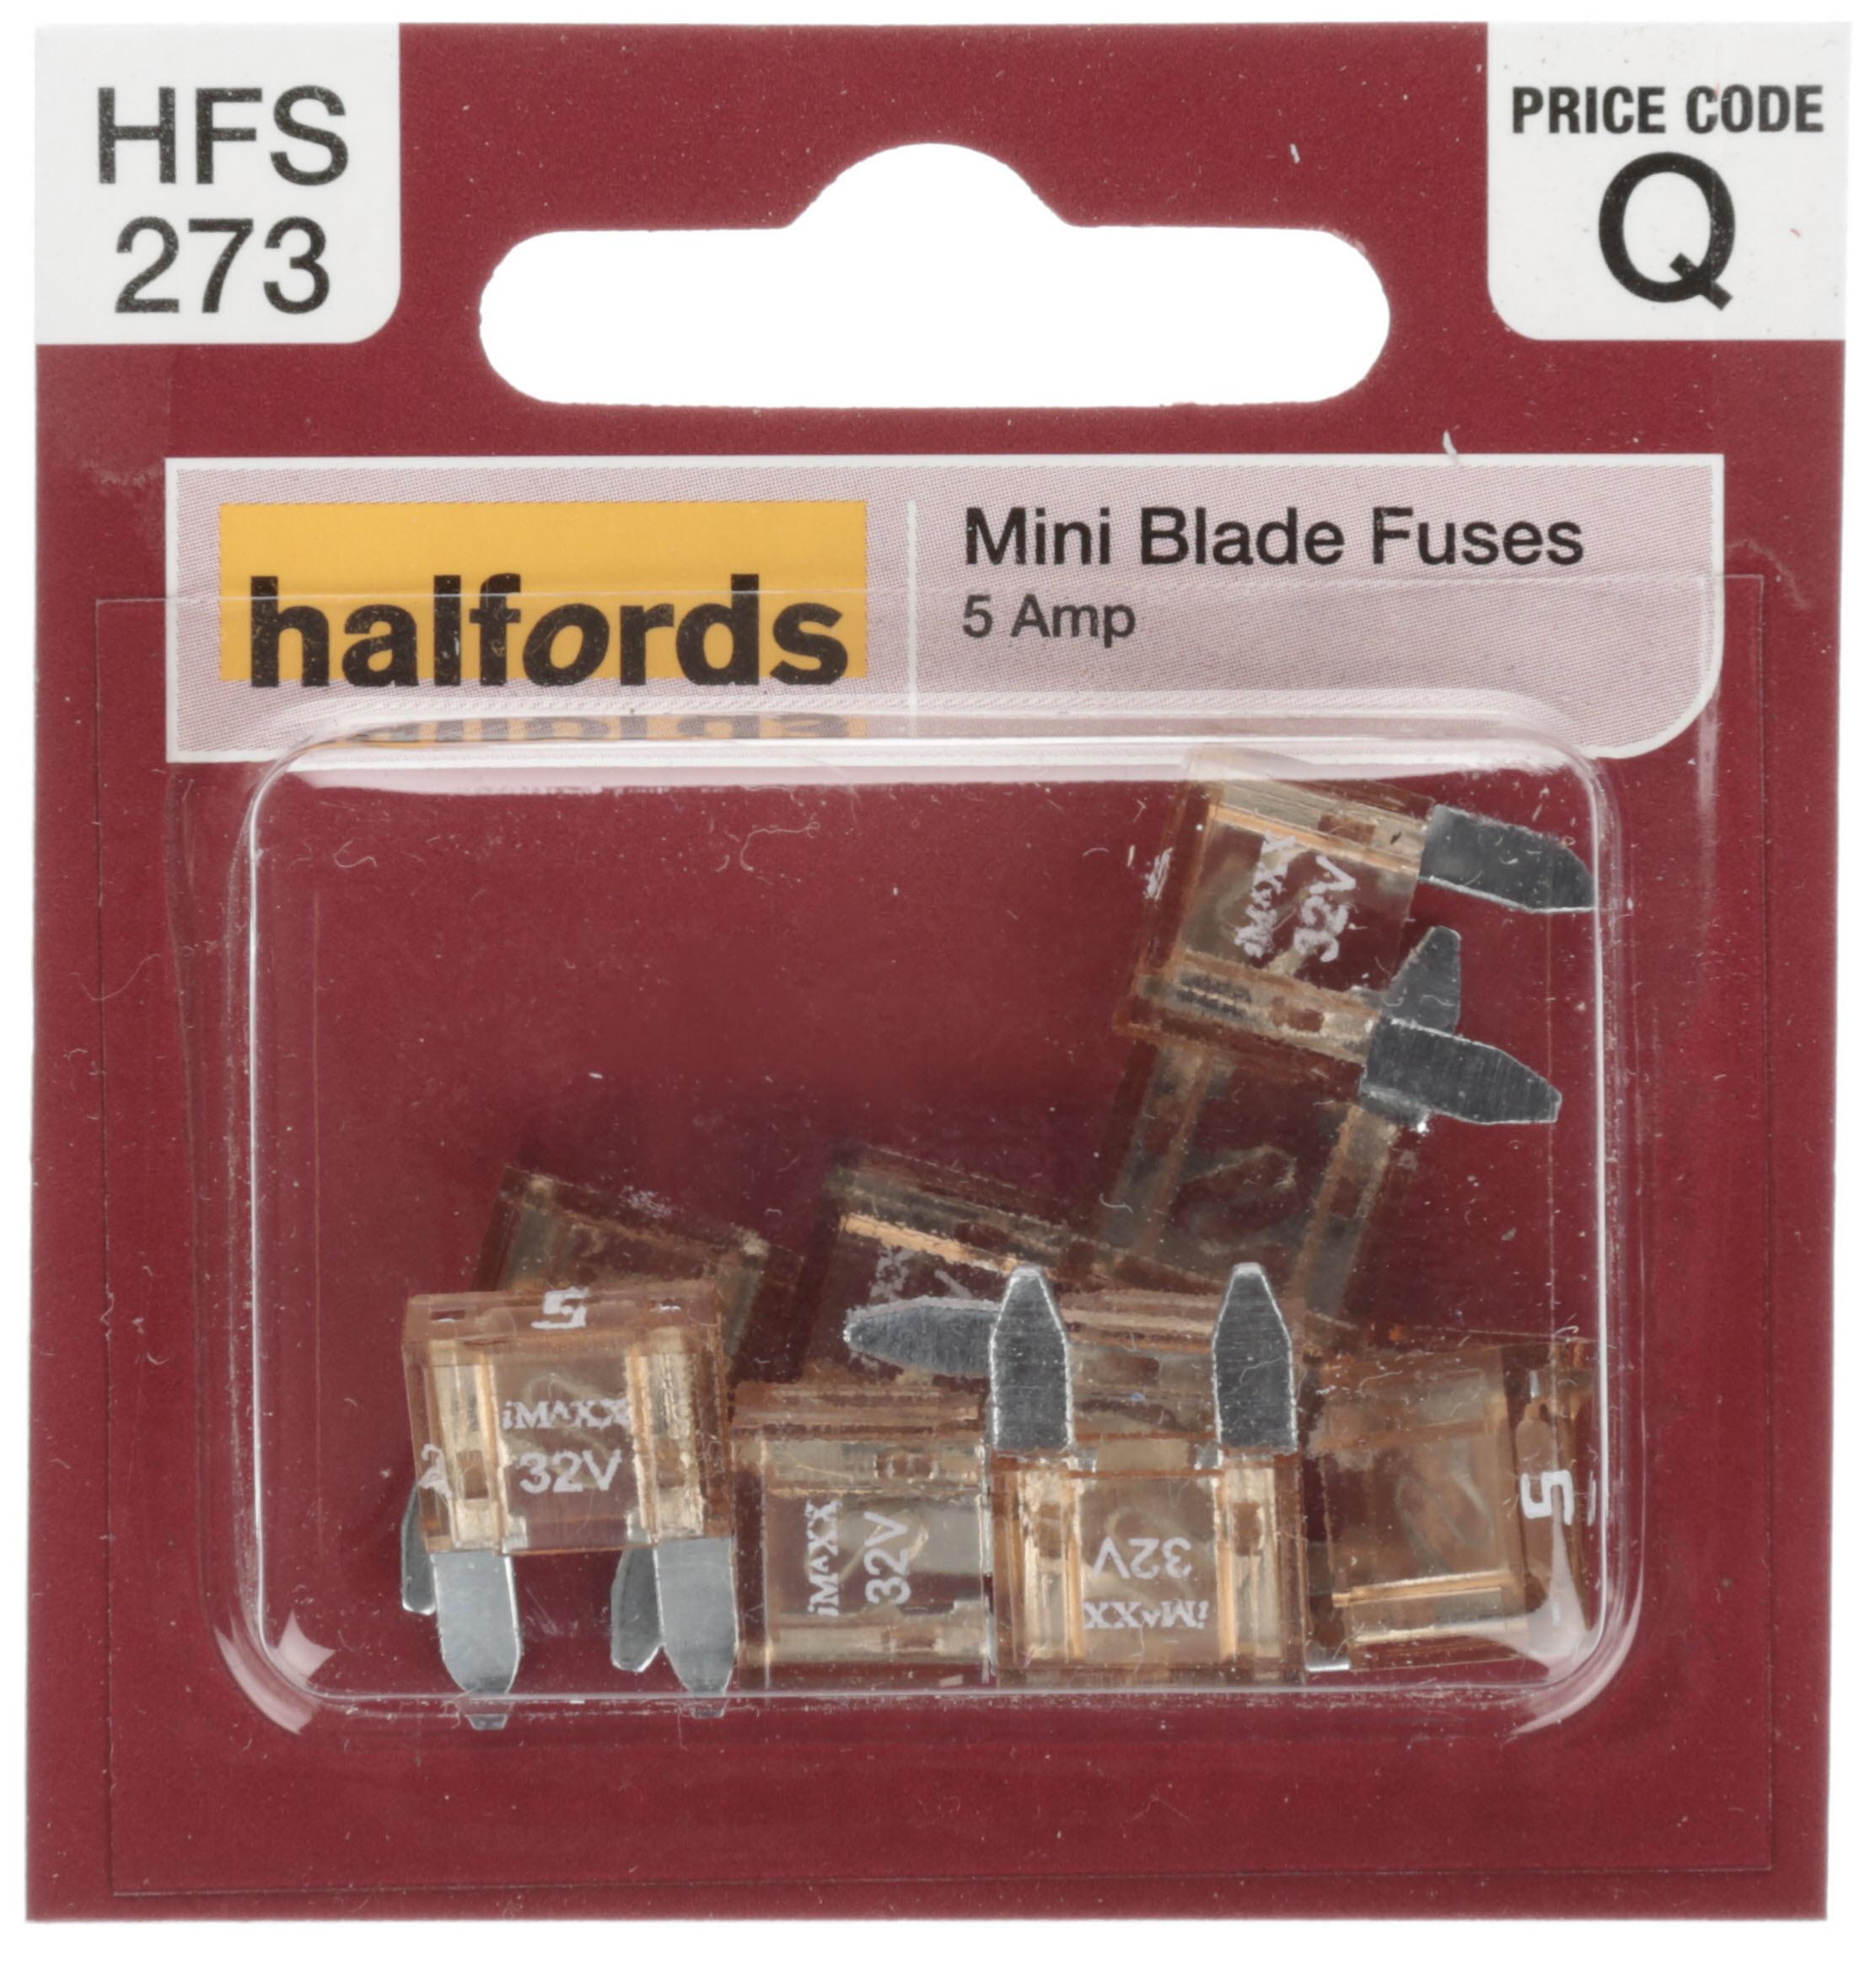 Halfords Mini Blade Fuses 5 Amp (Hfs273)